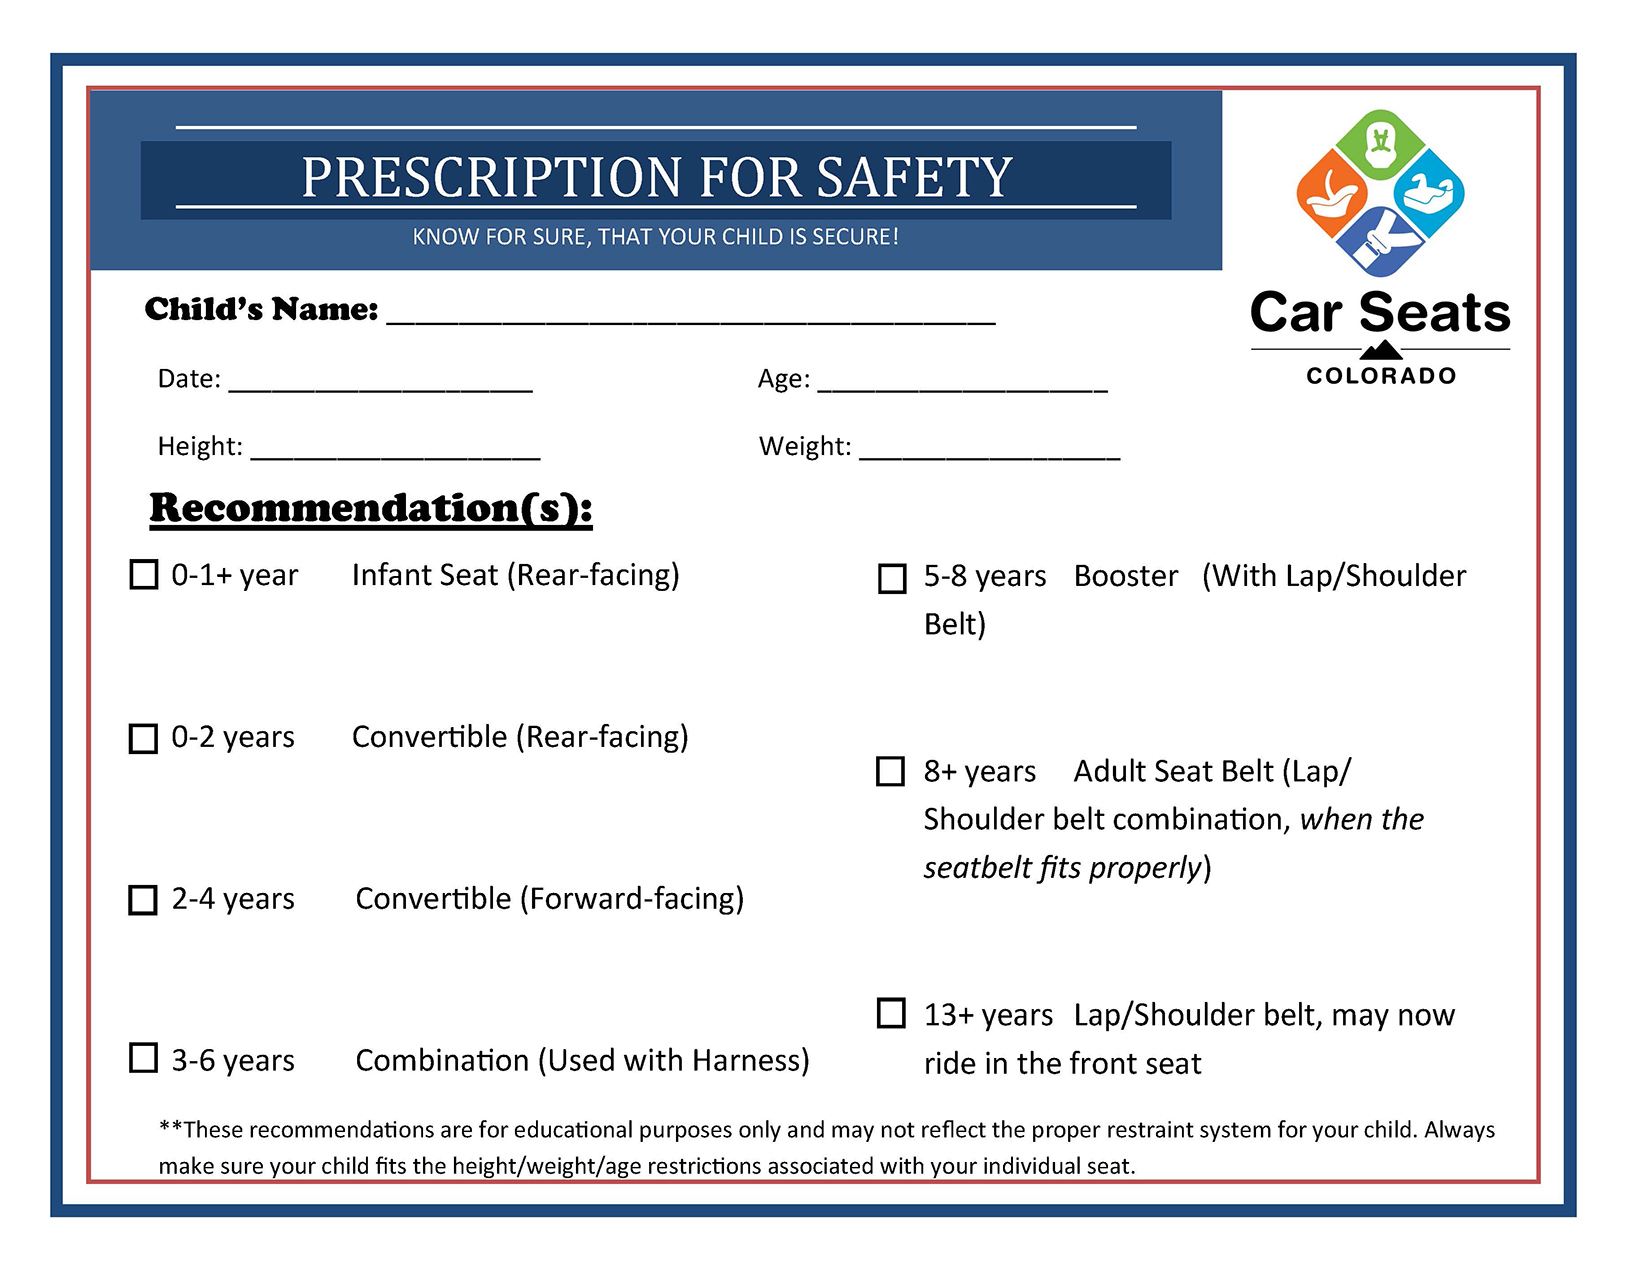 Prescription Child Safety Card detail image